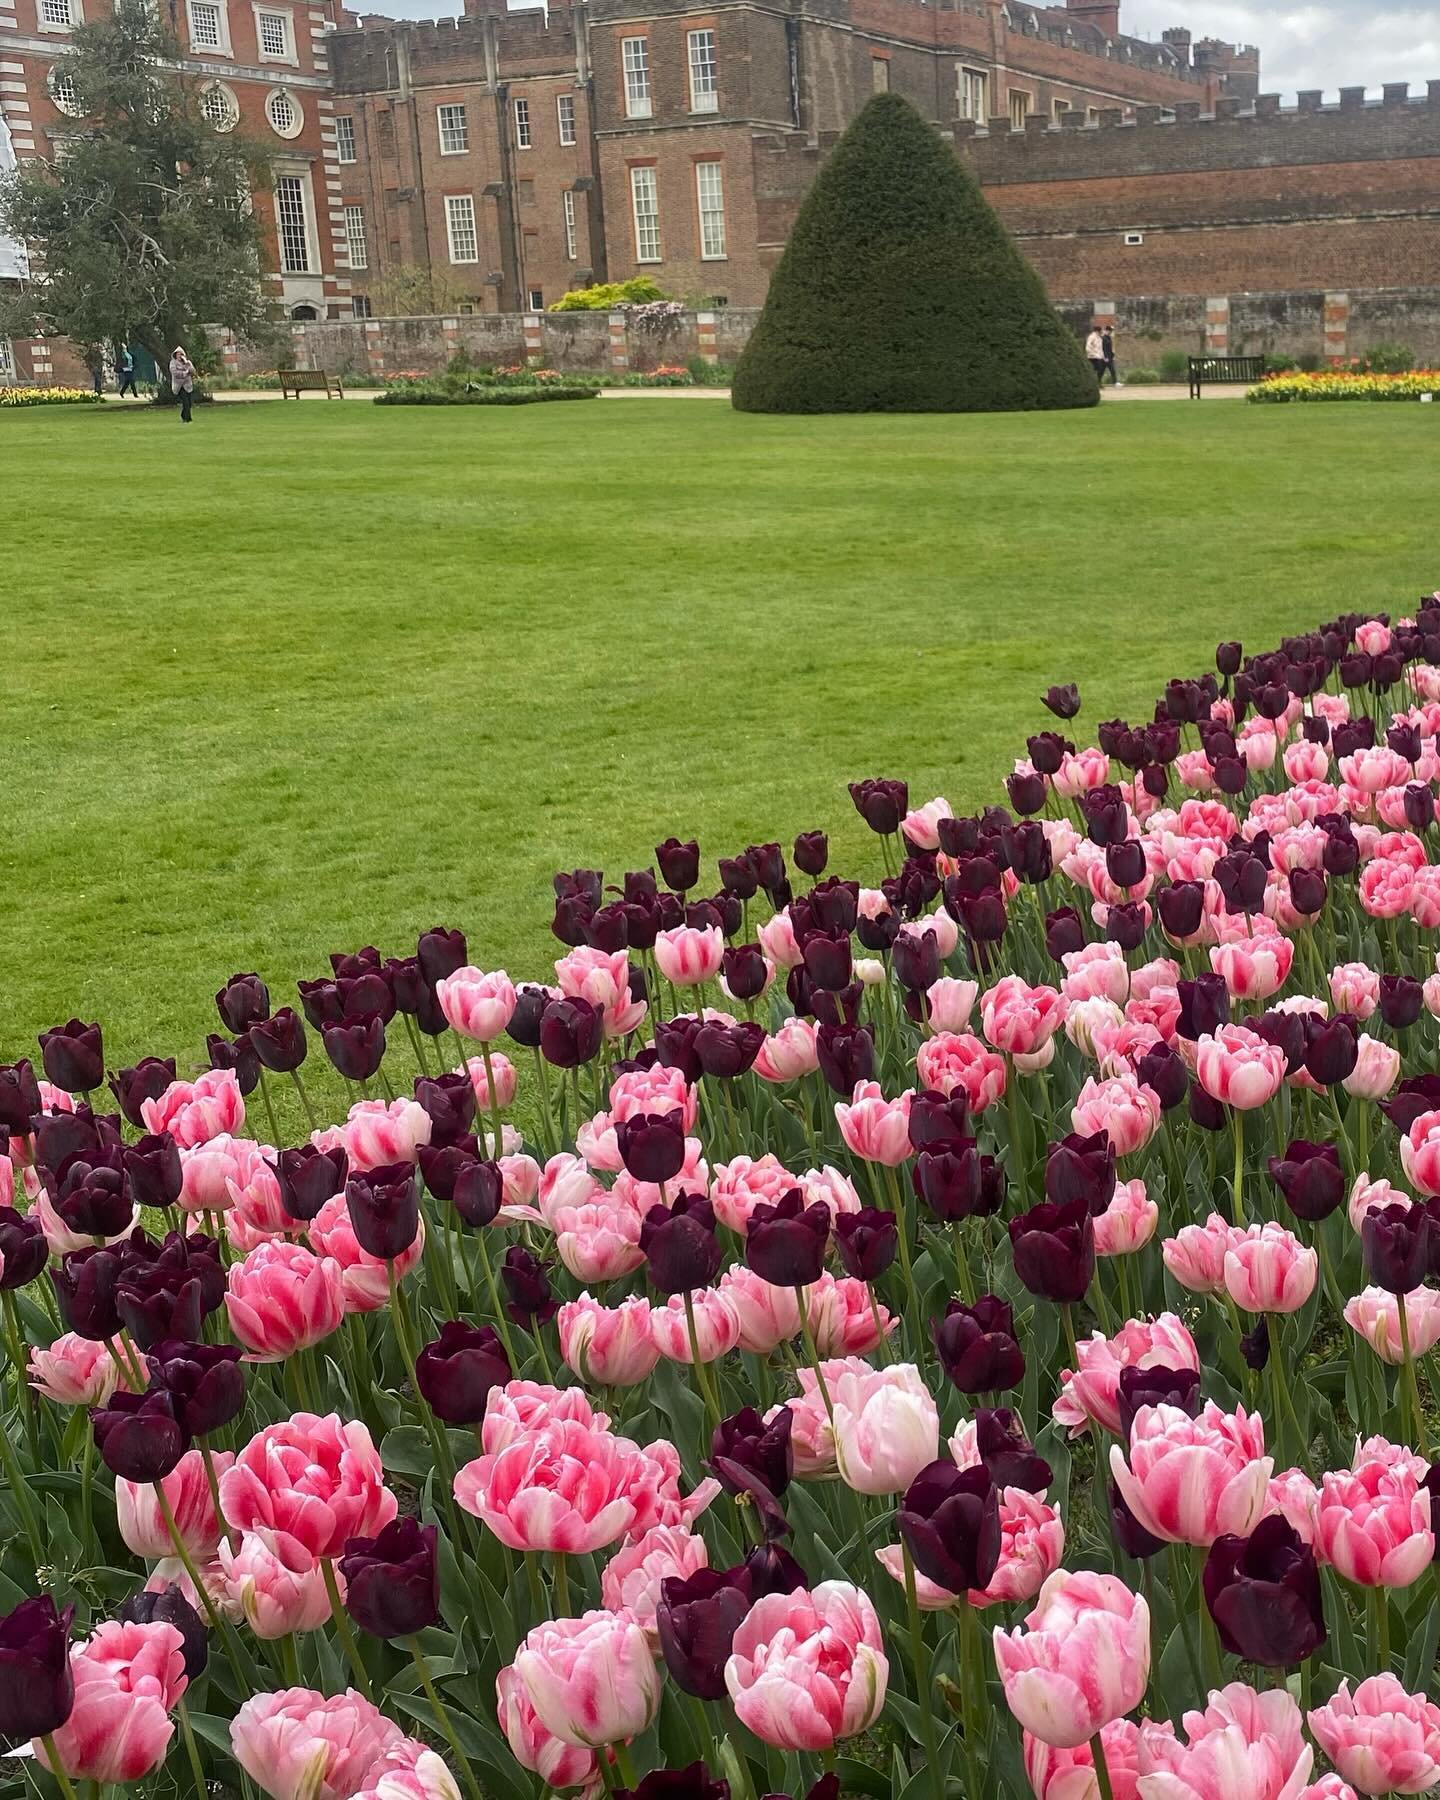 Hampton Court Tulip Festival, London. 

So many beauties - drawn to the Drama of it all. 

.
.
.
.
#hamptoncourtpalace #hamptoncourt #tulipfestival #london #colours #tulips #gardendesign #history #thames #tudors #georgian 

@karendevilliers_mysilvers